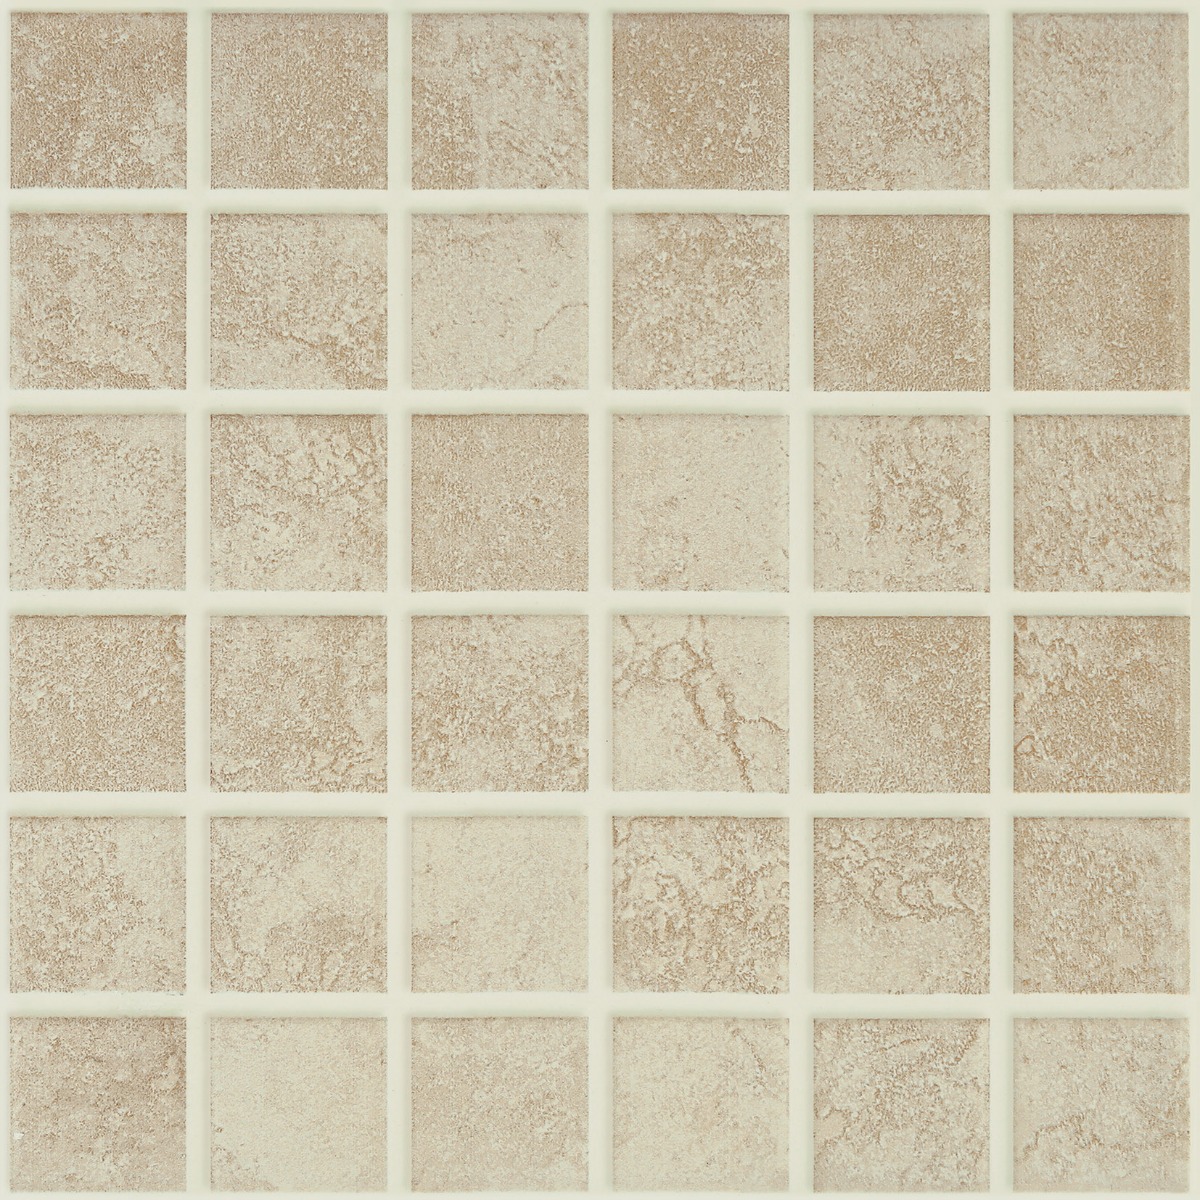 Bathroom Tiles for Accent Tiles